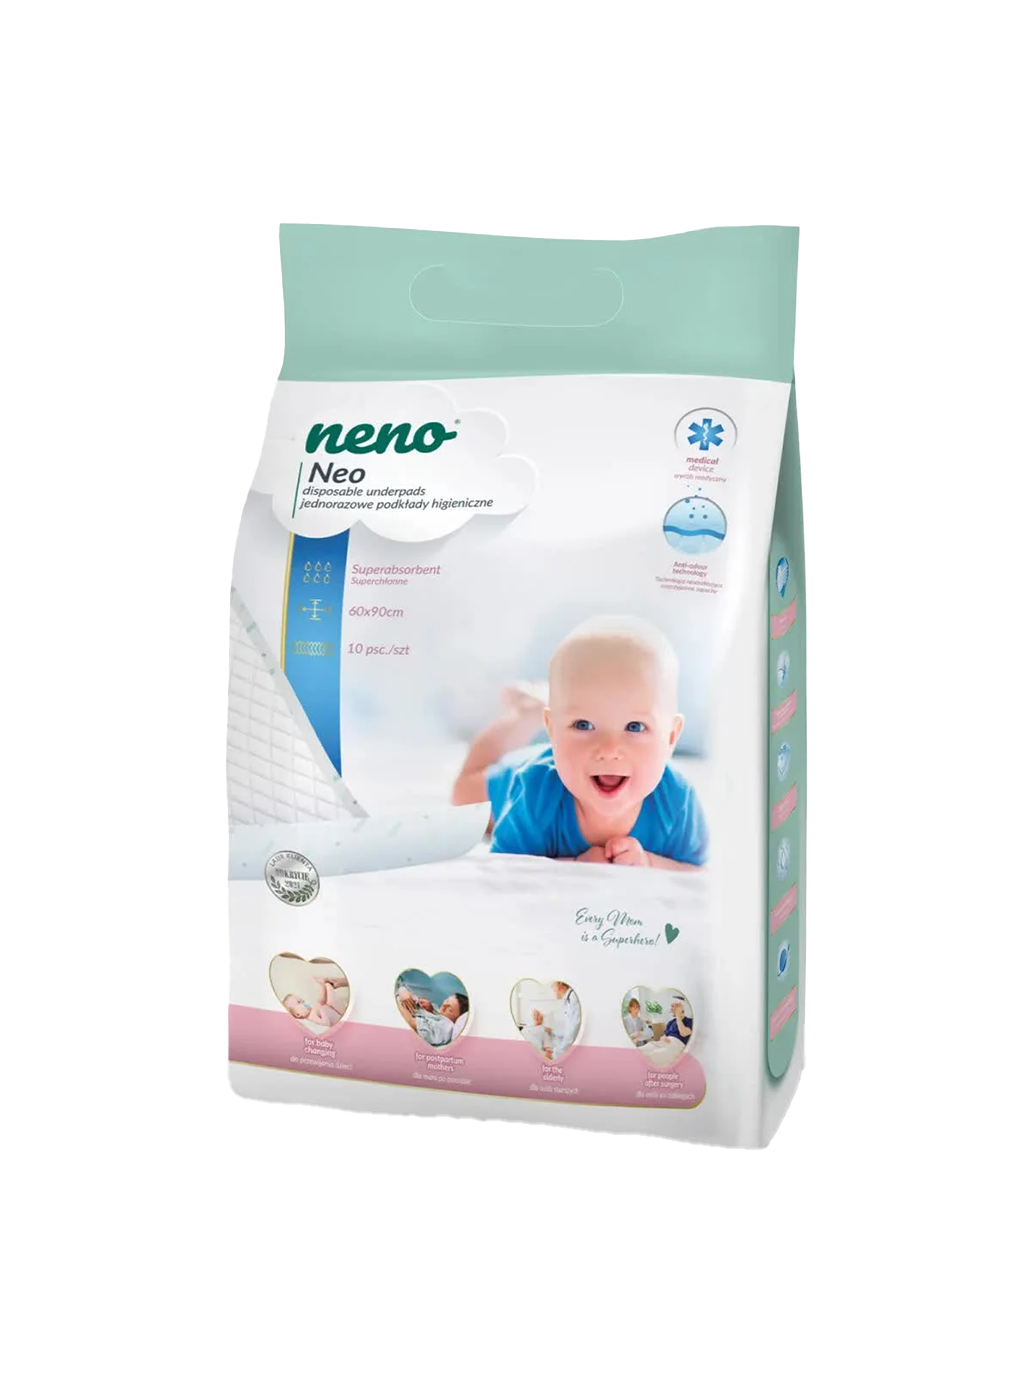 Neno Neo large disposable hygienic pads